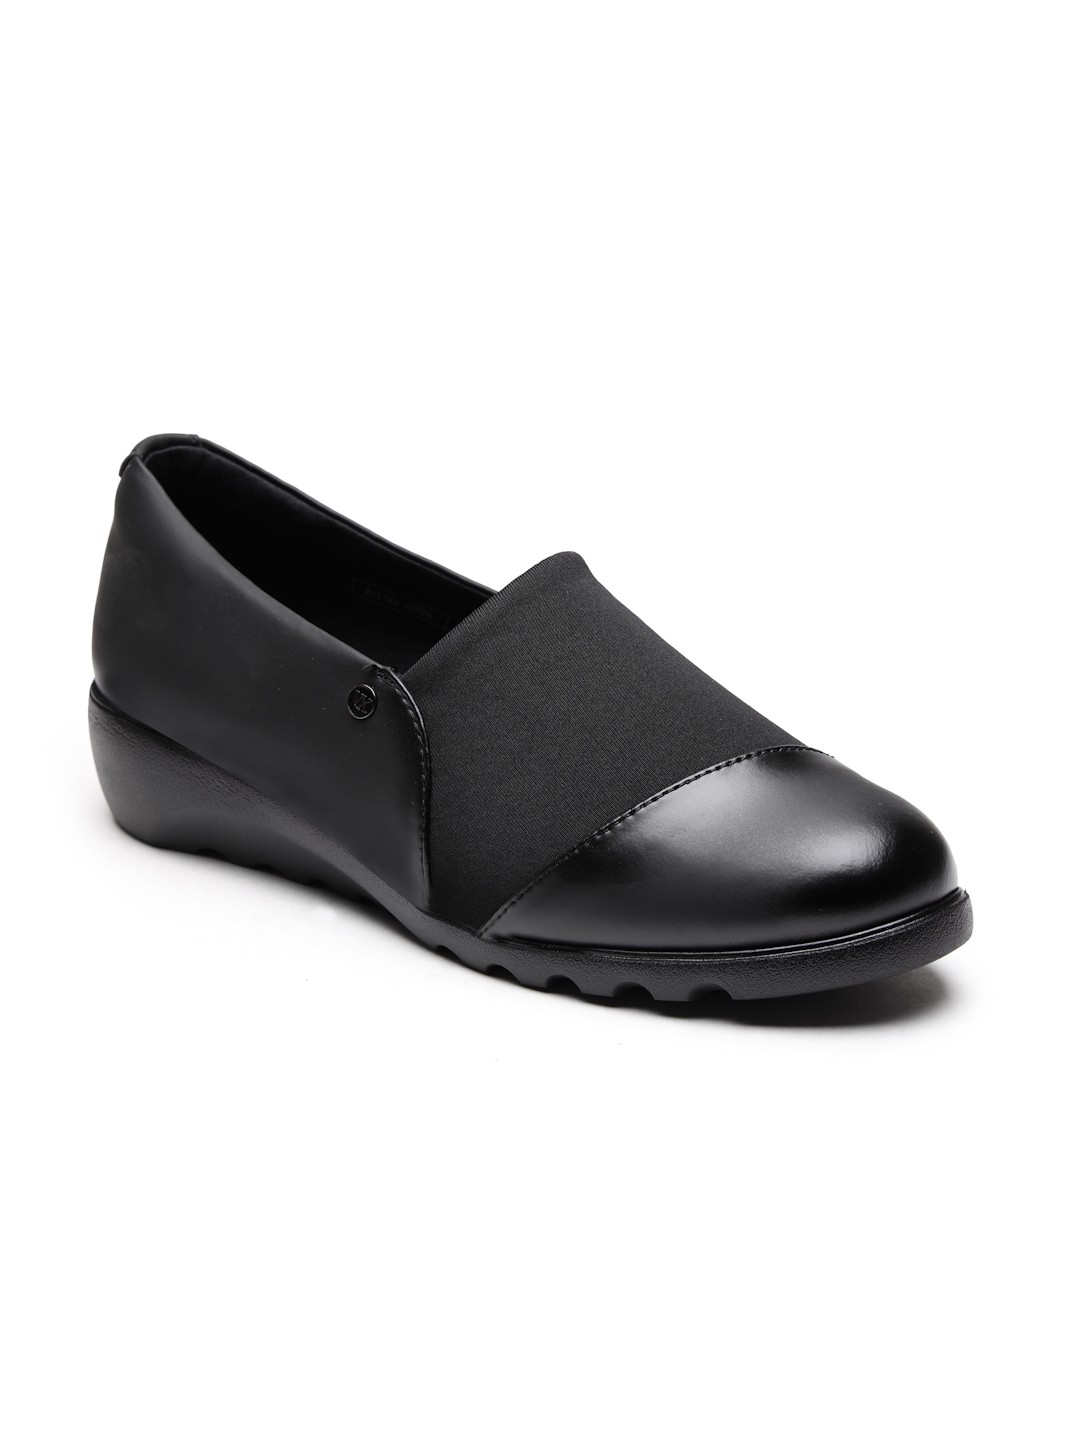 Buy Von Wellx Germany Comfort Women's Black Casual Shoes Ayla Online in Chandigarh